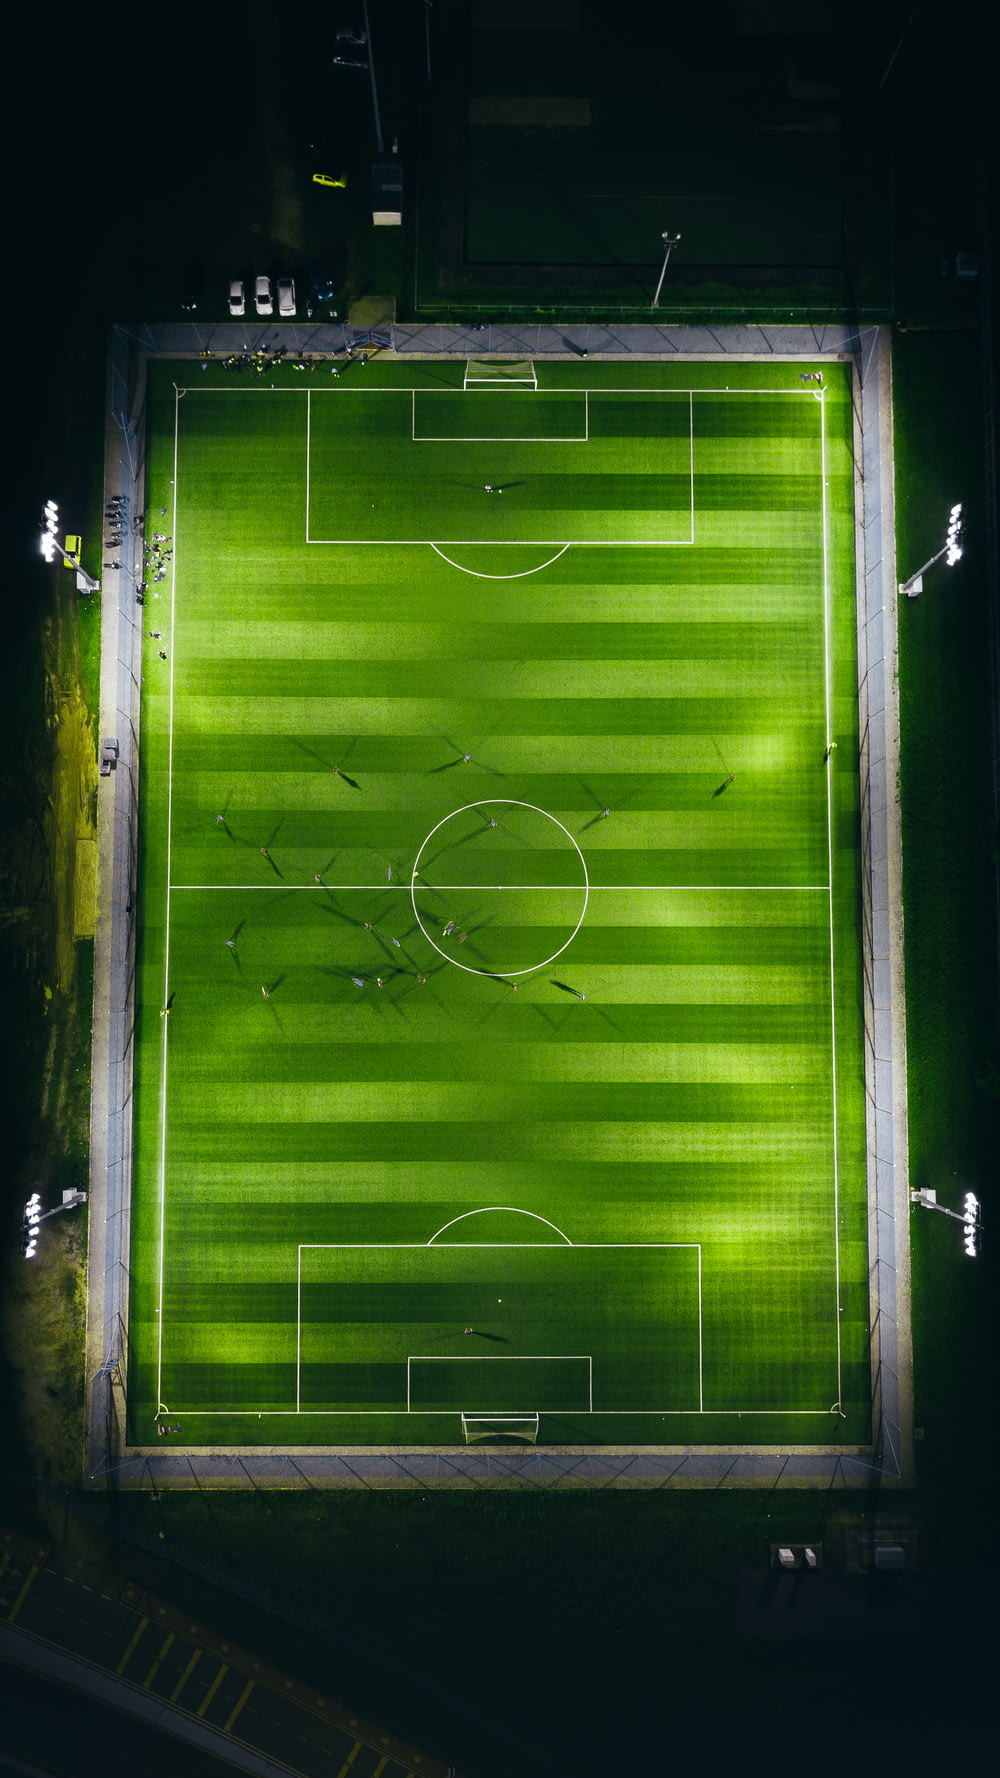 Fotografía a vista de pájaro de un campo de fútbol verde con luces